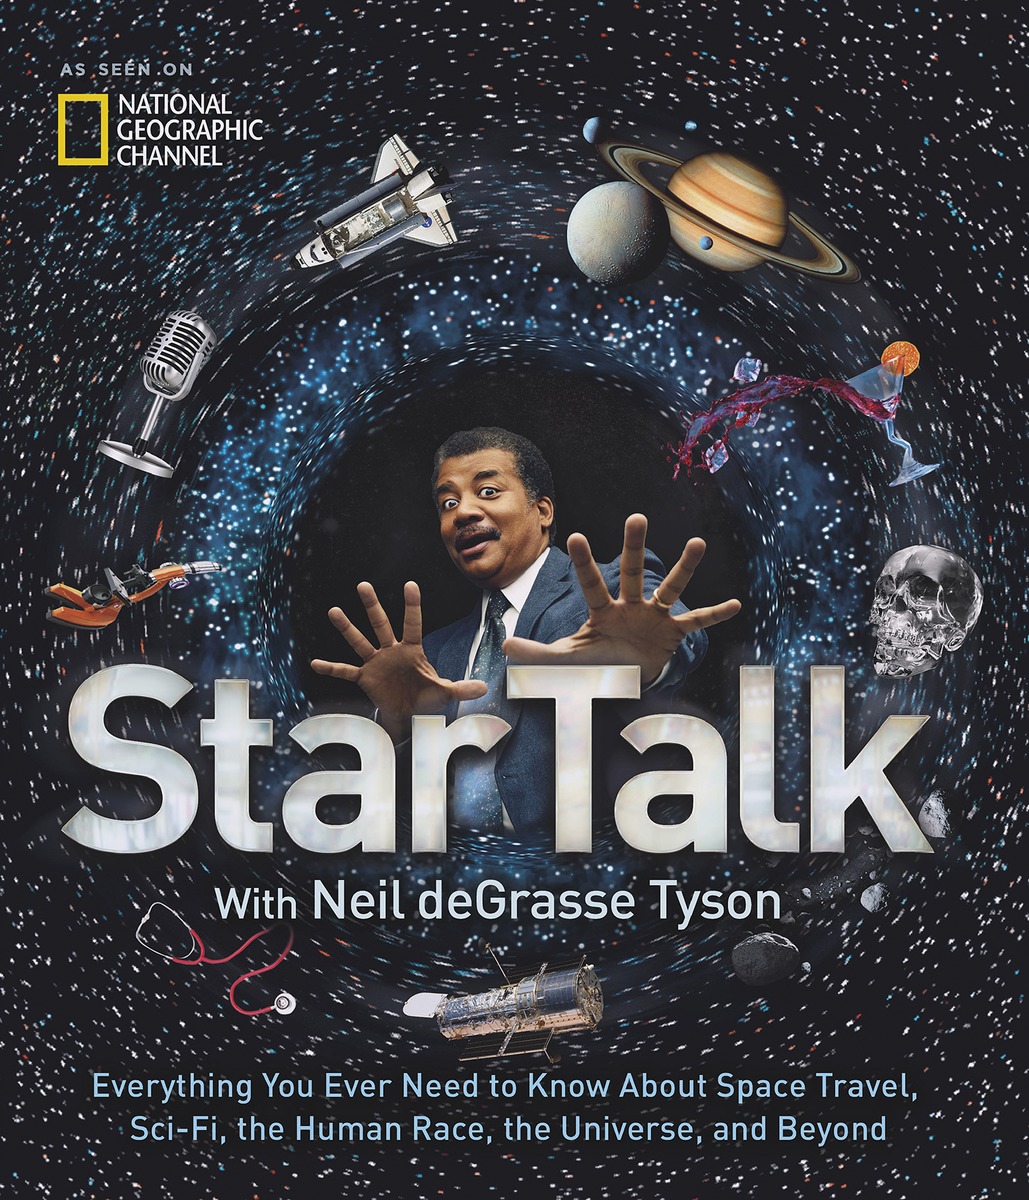 Link to the StarTalk book  by Neil deGrasse Tyson.